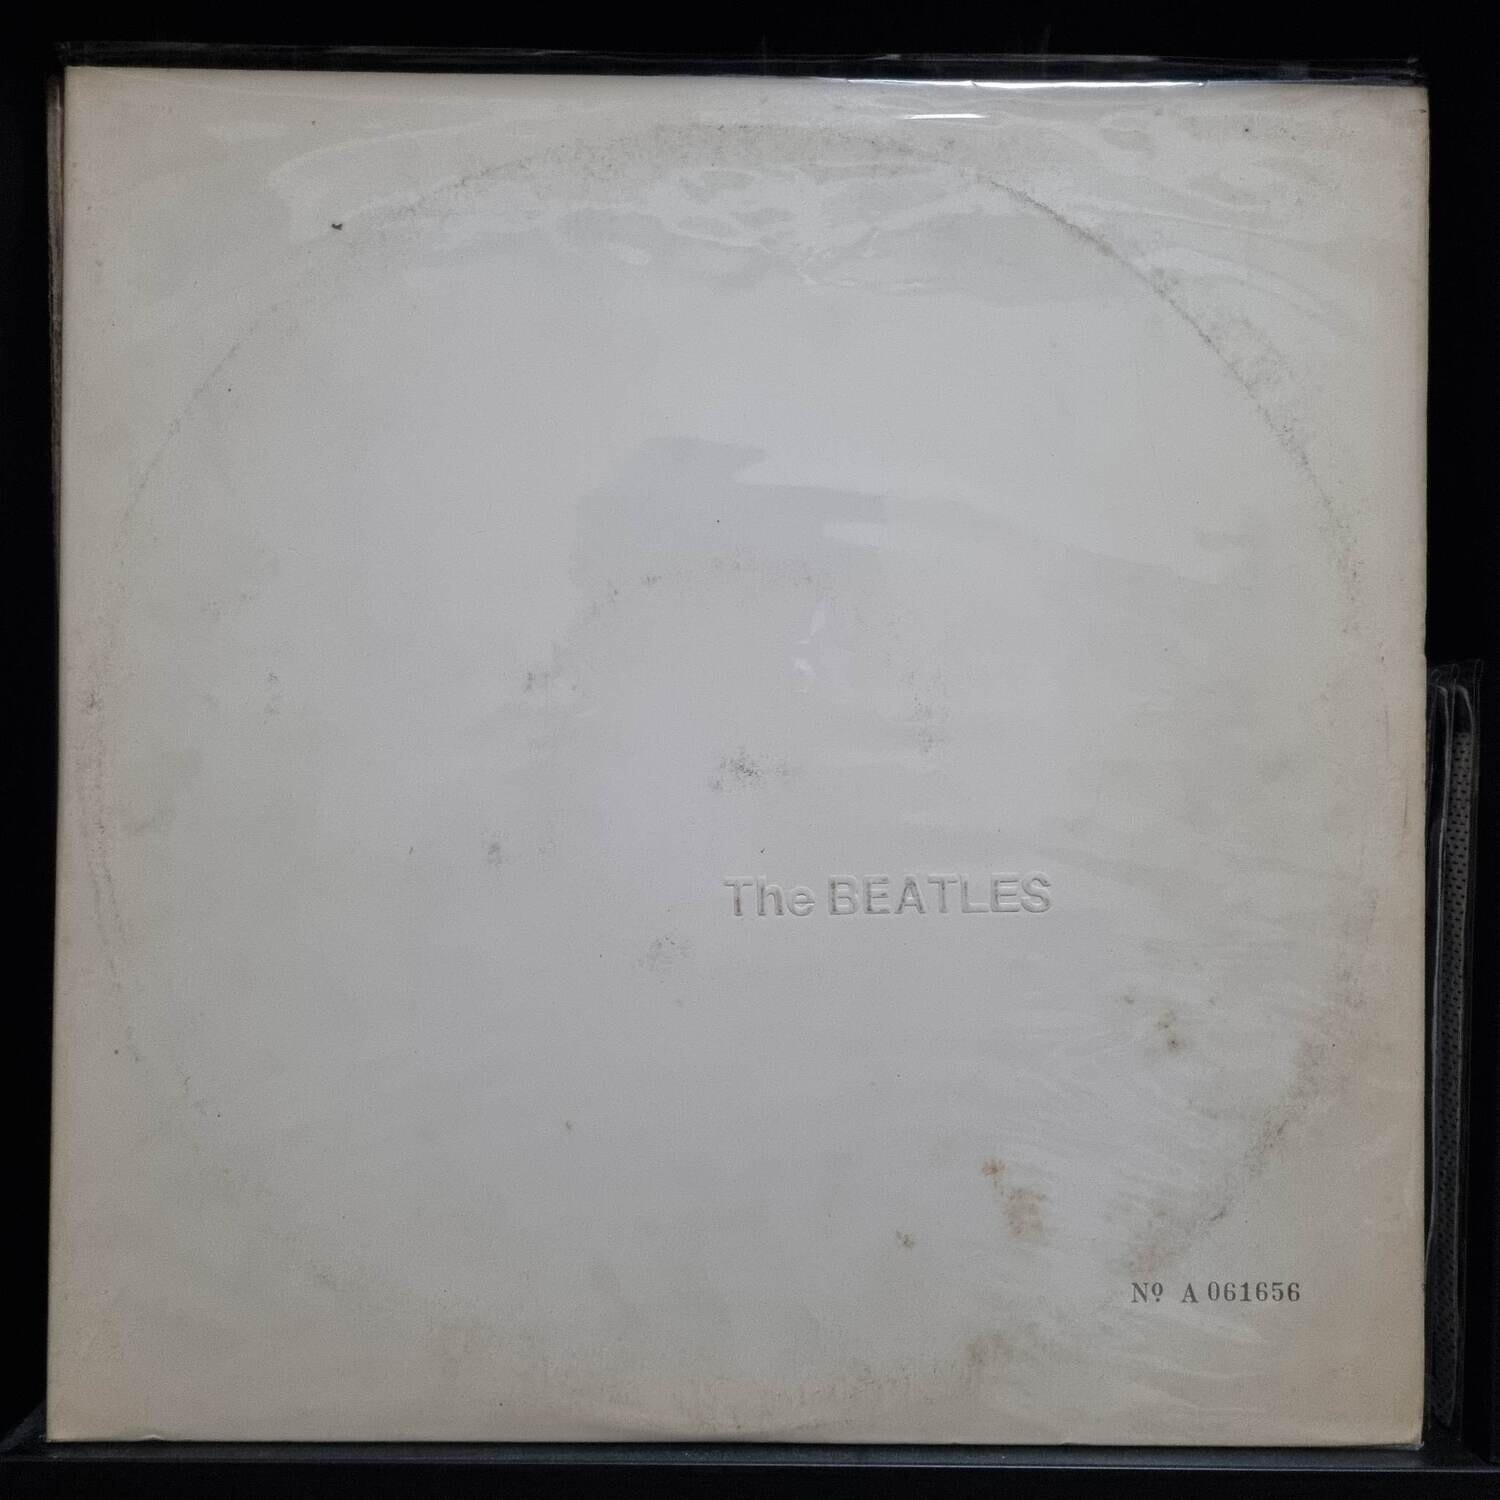 The Beatles- The Beatles (White Album)